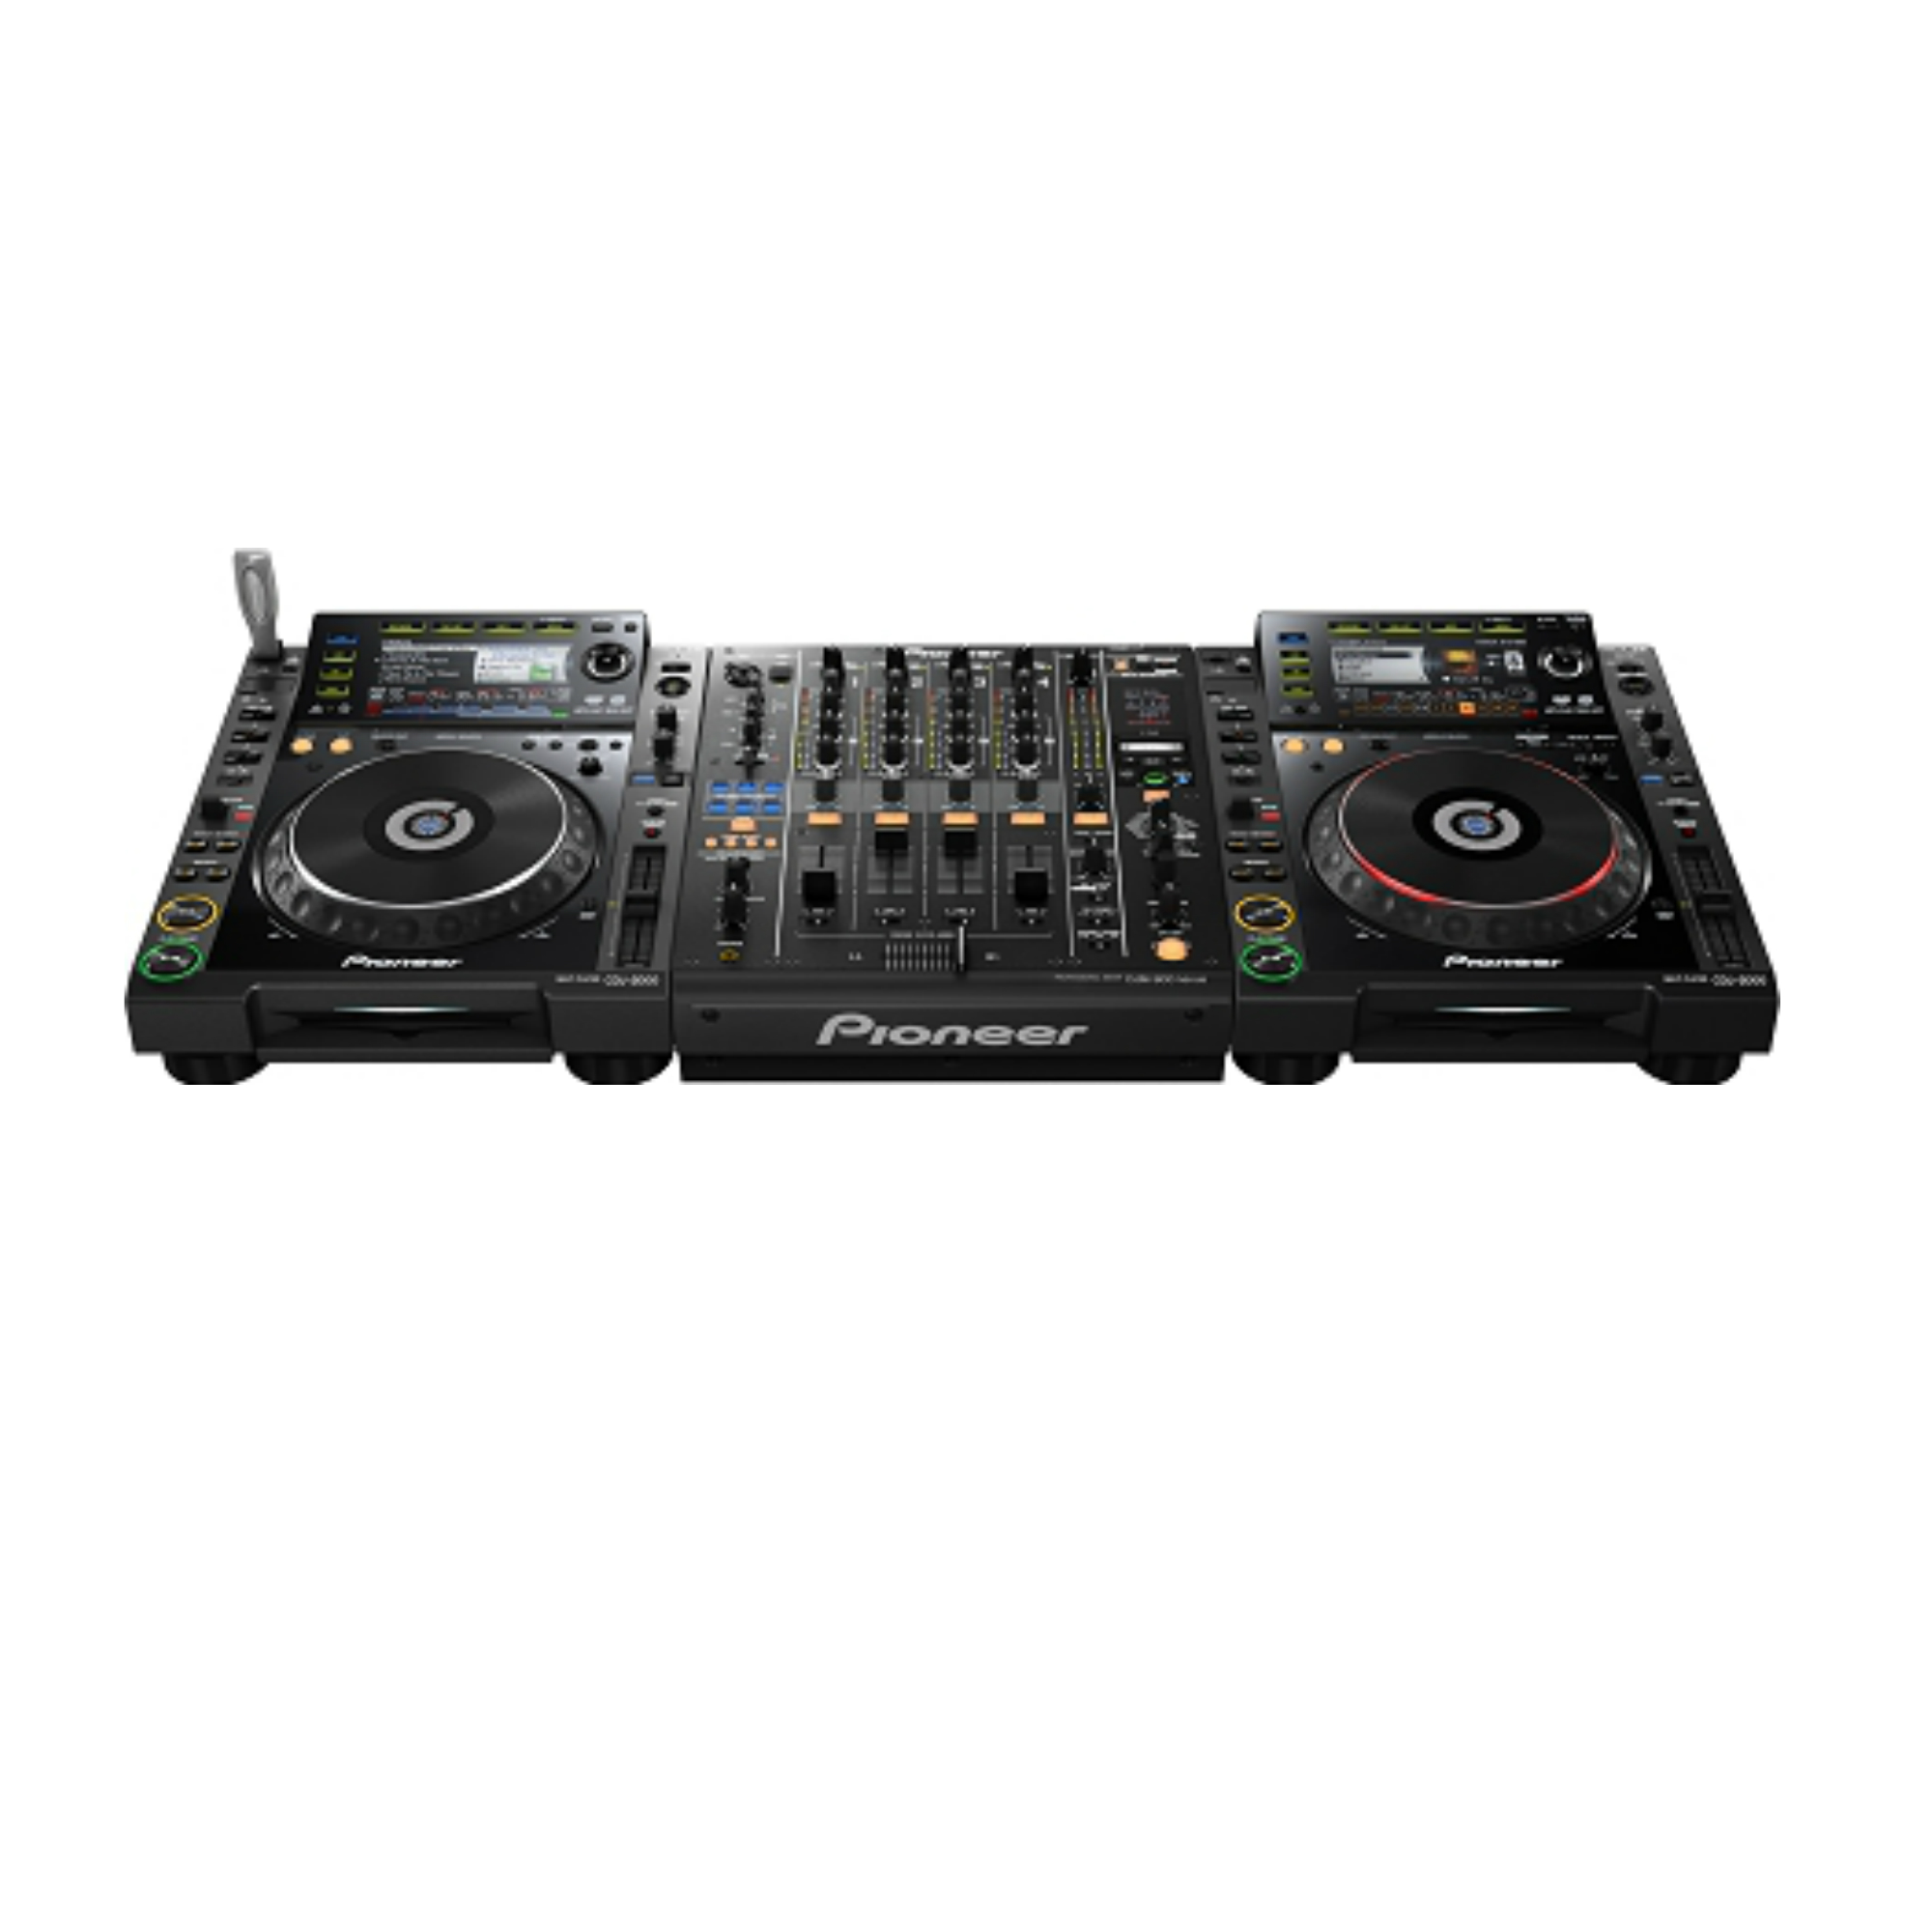 Two CDJ-2000s And A DJM-900 Weekend Rental Package - DJ